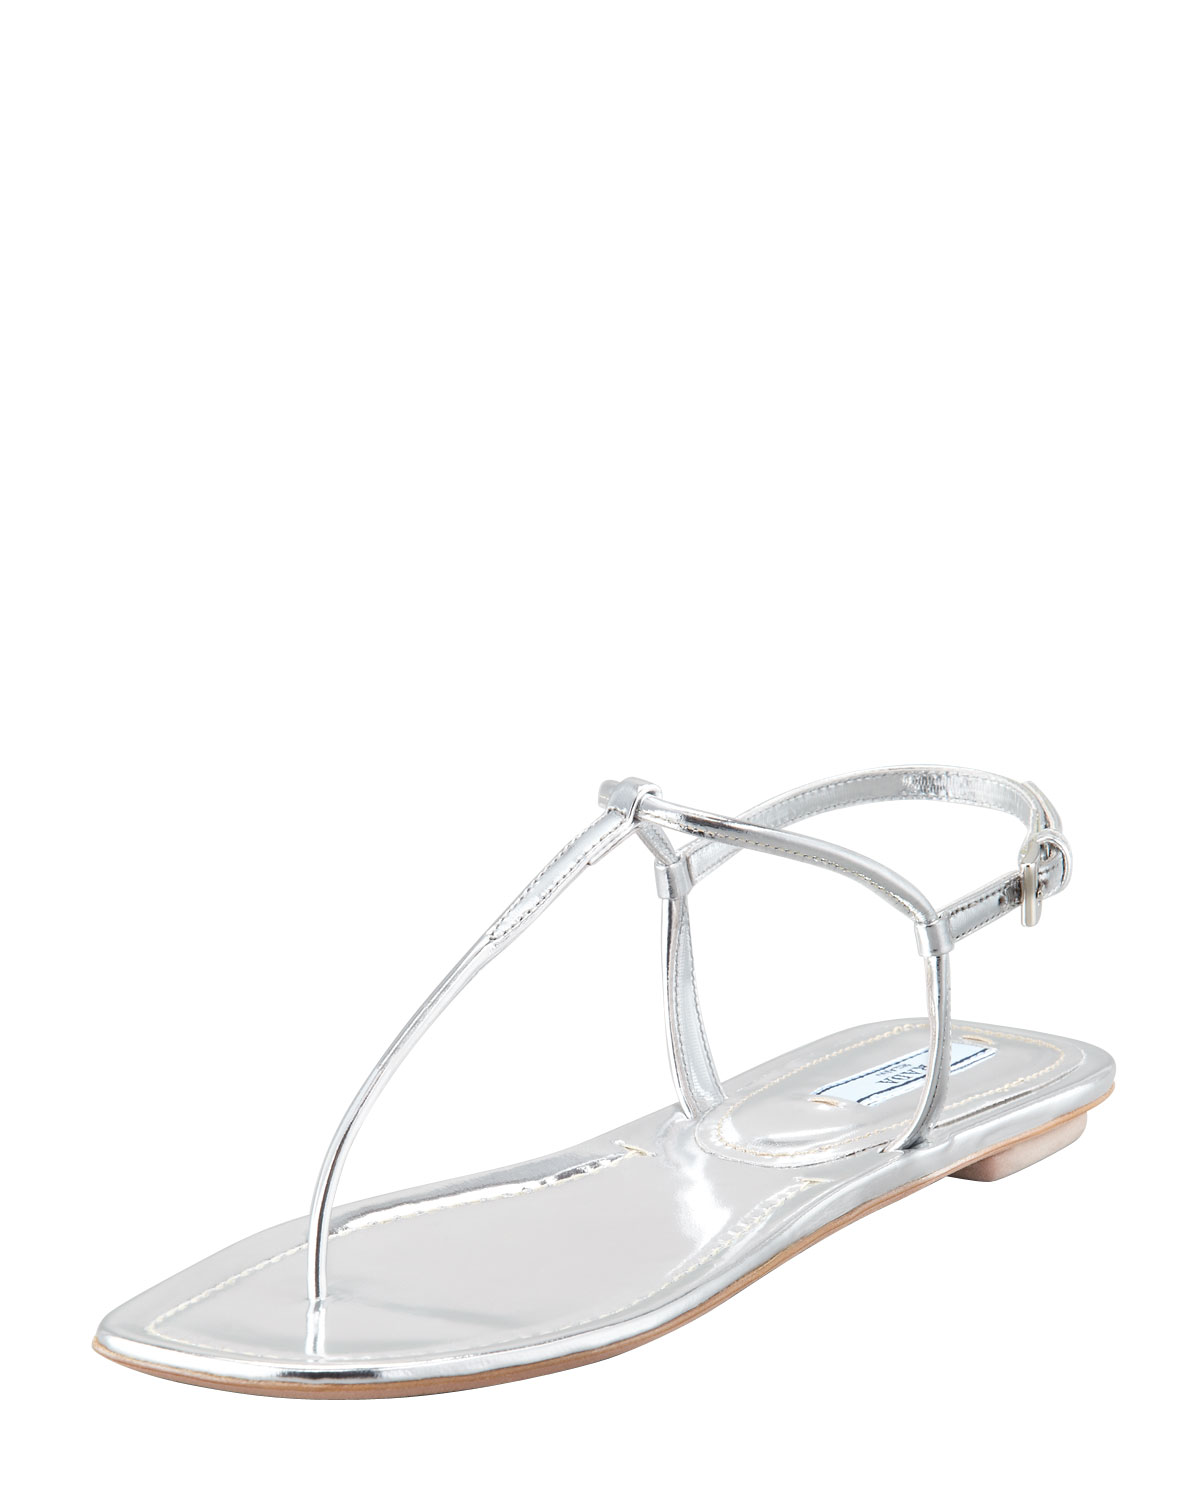 Prada Flat Metallic Leather Thong Sandal Silve in Silver | Lyst